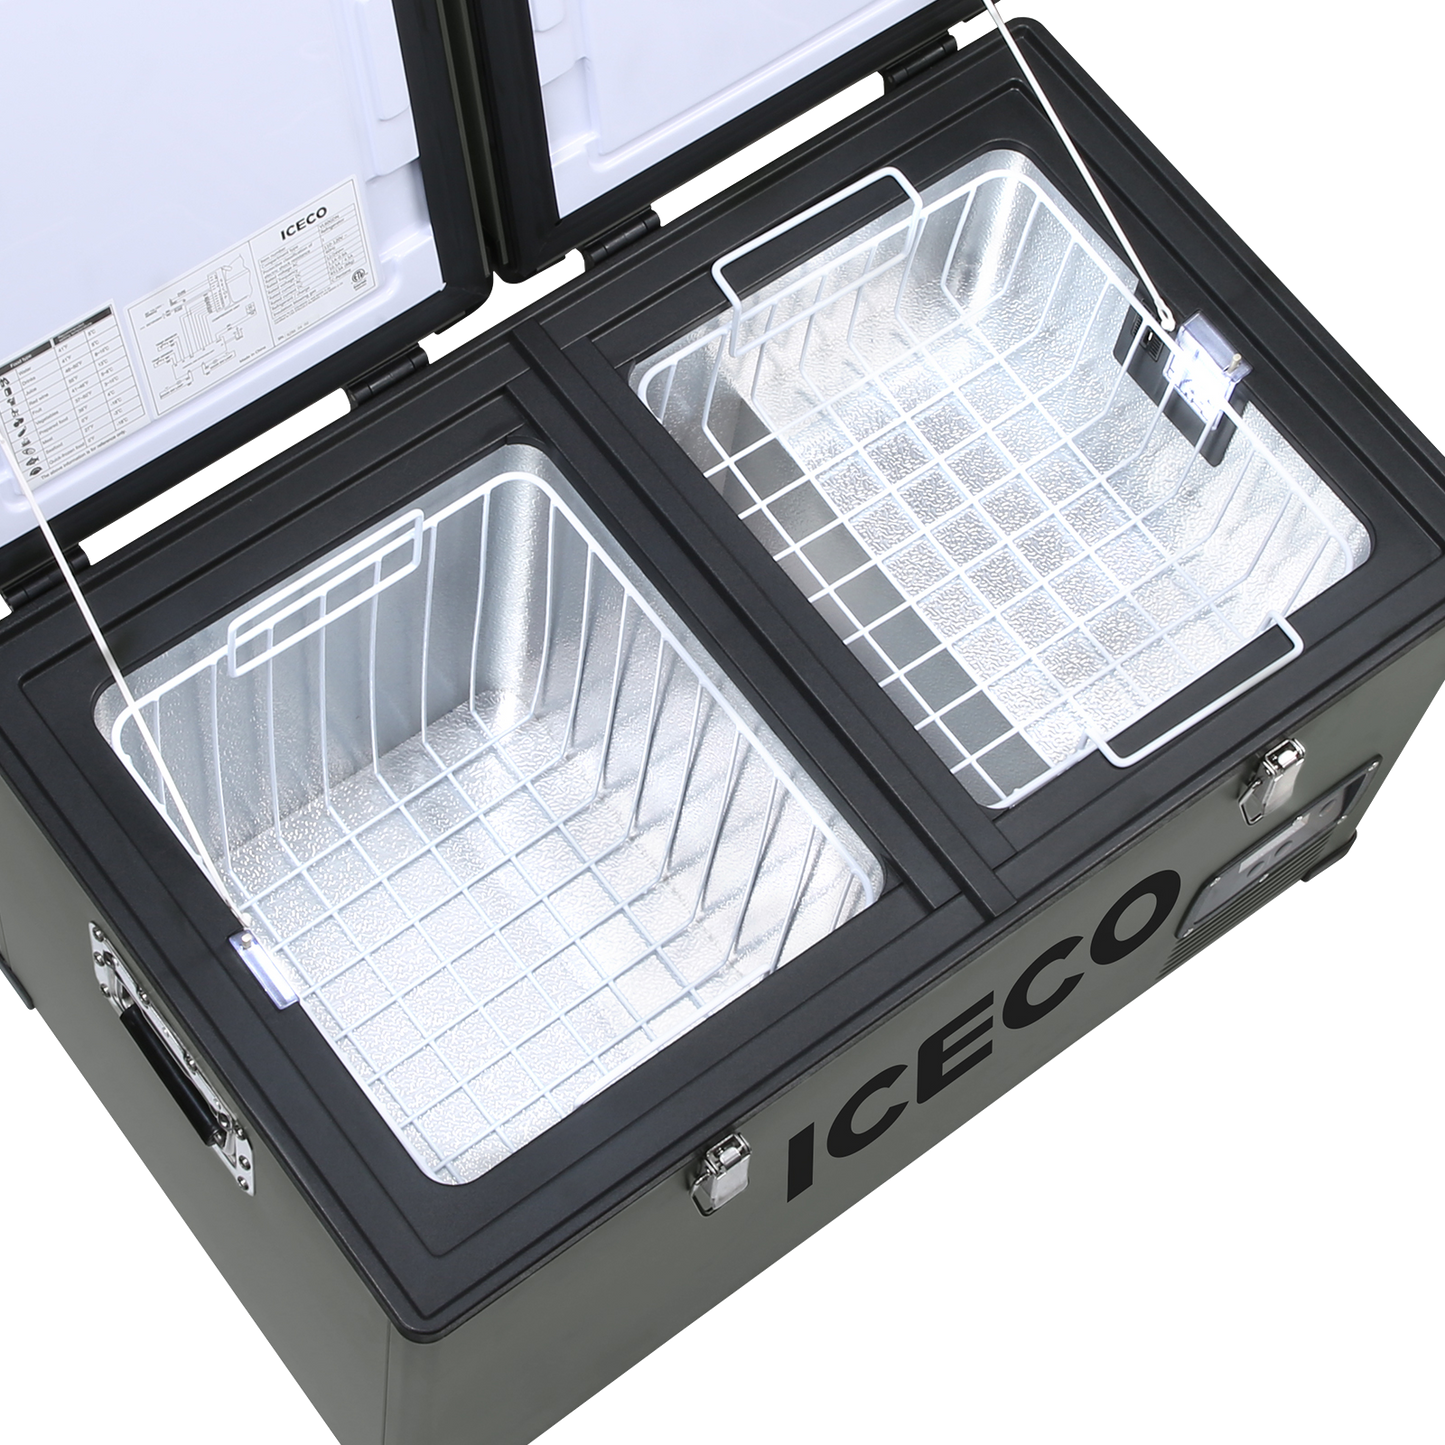 ICECO 63.4QT VL60 Dual 12V Portable Freezer Refrigerator